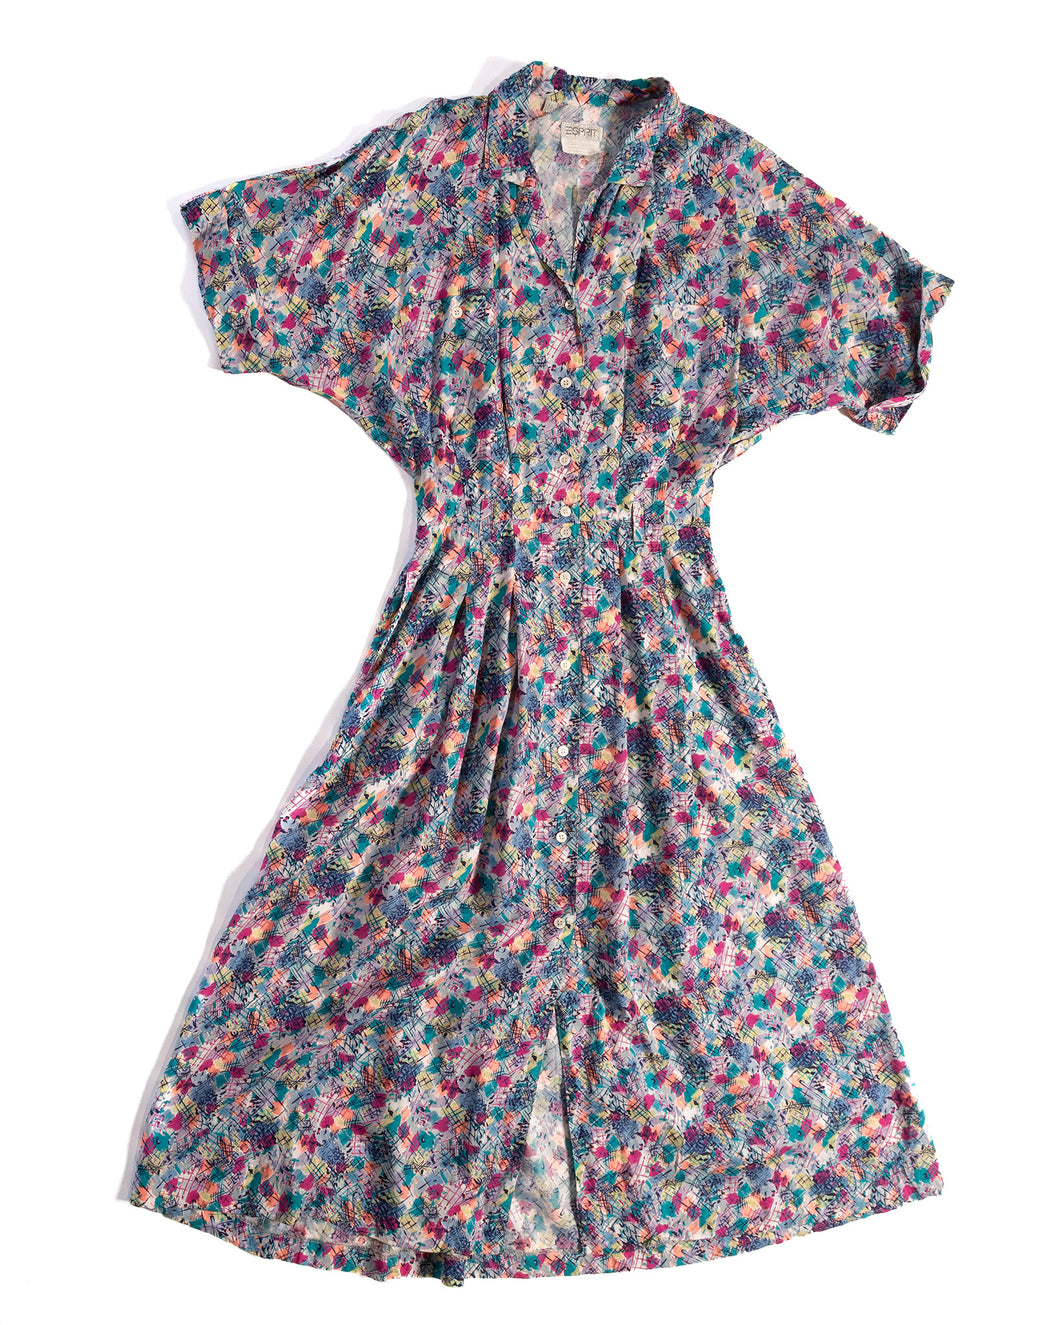 Esprit 1980s Rayon Abstract Pattern Shirt Dress., medium